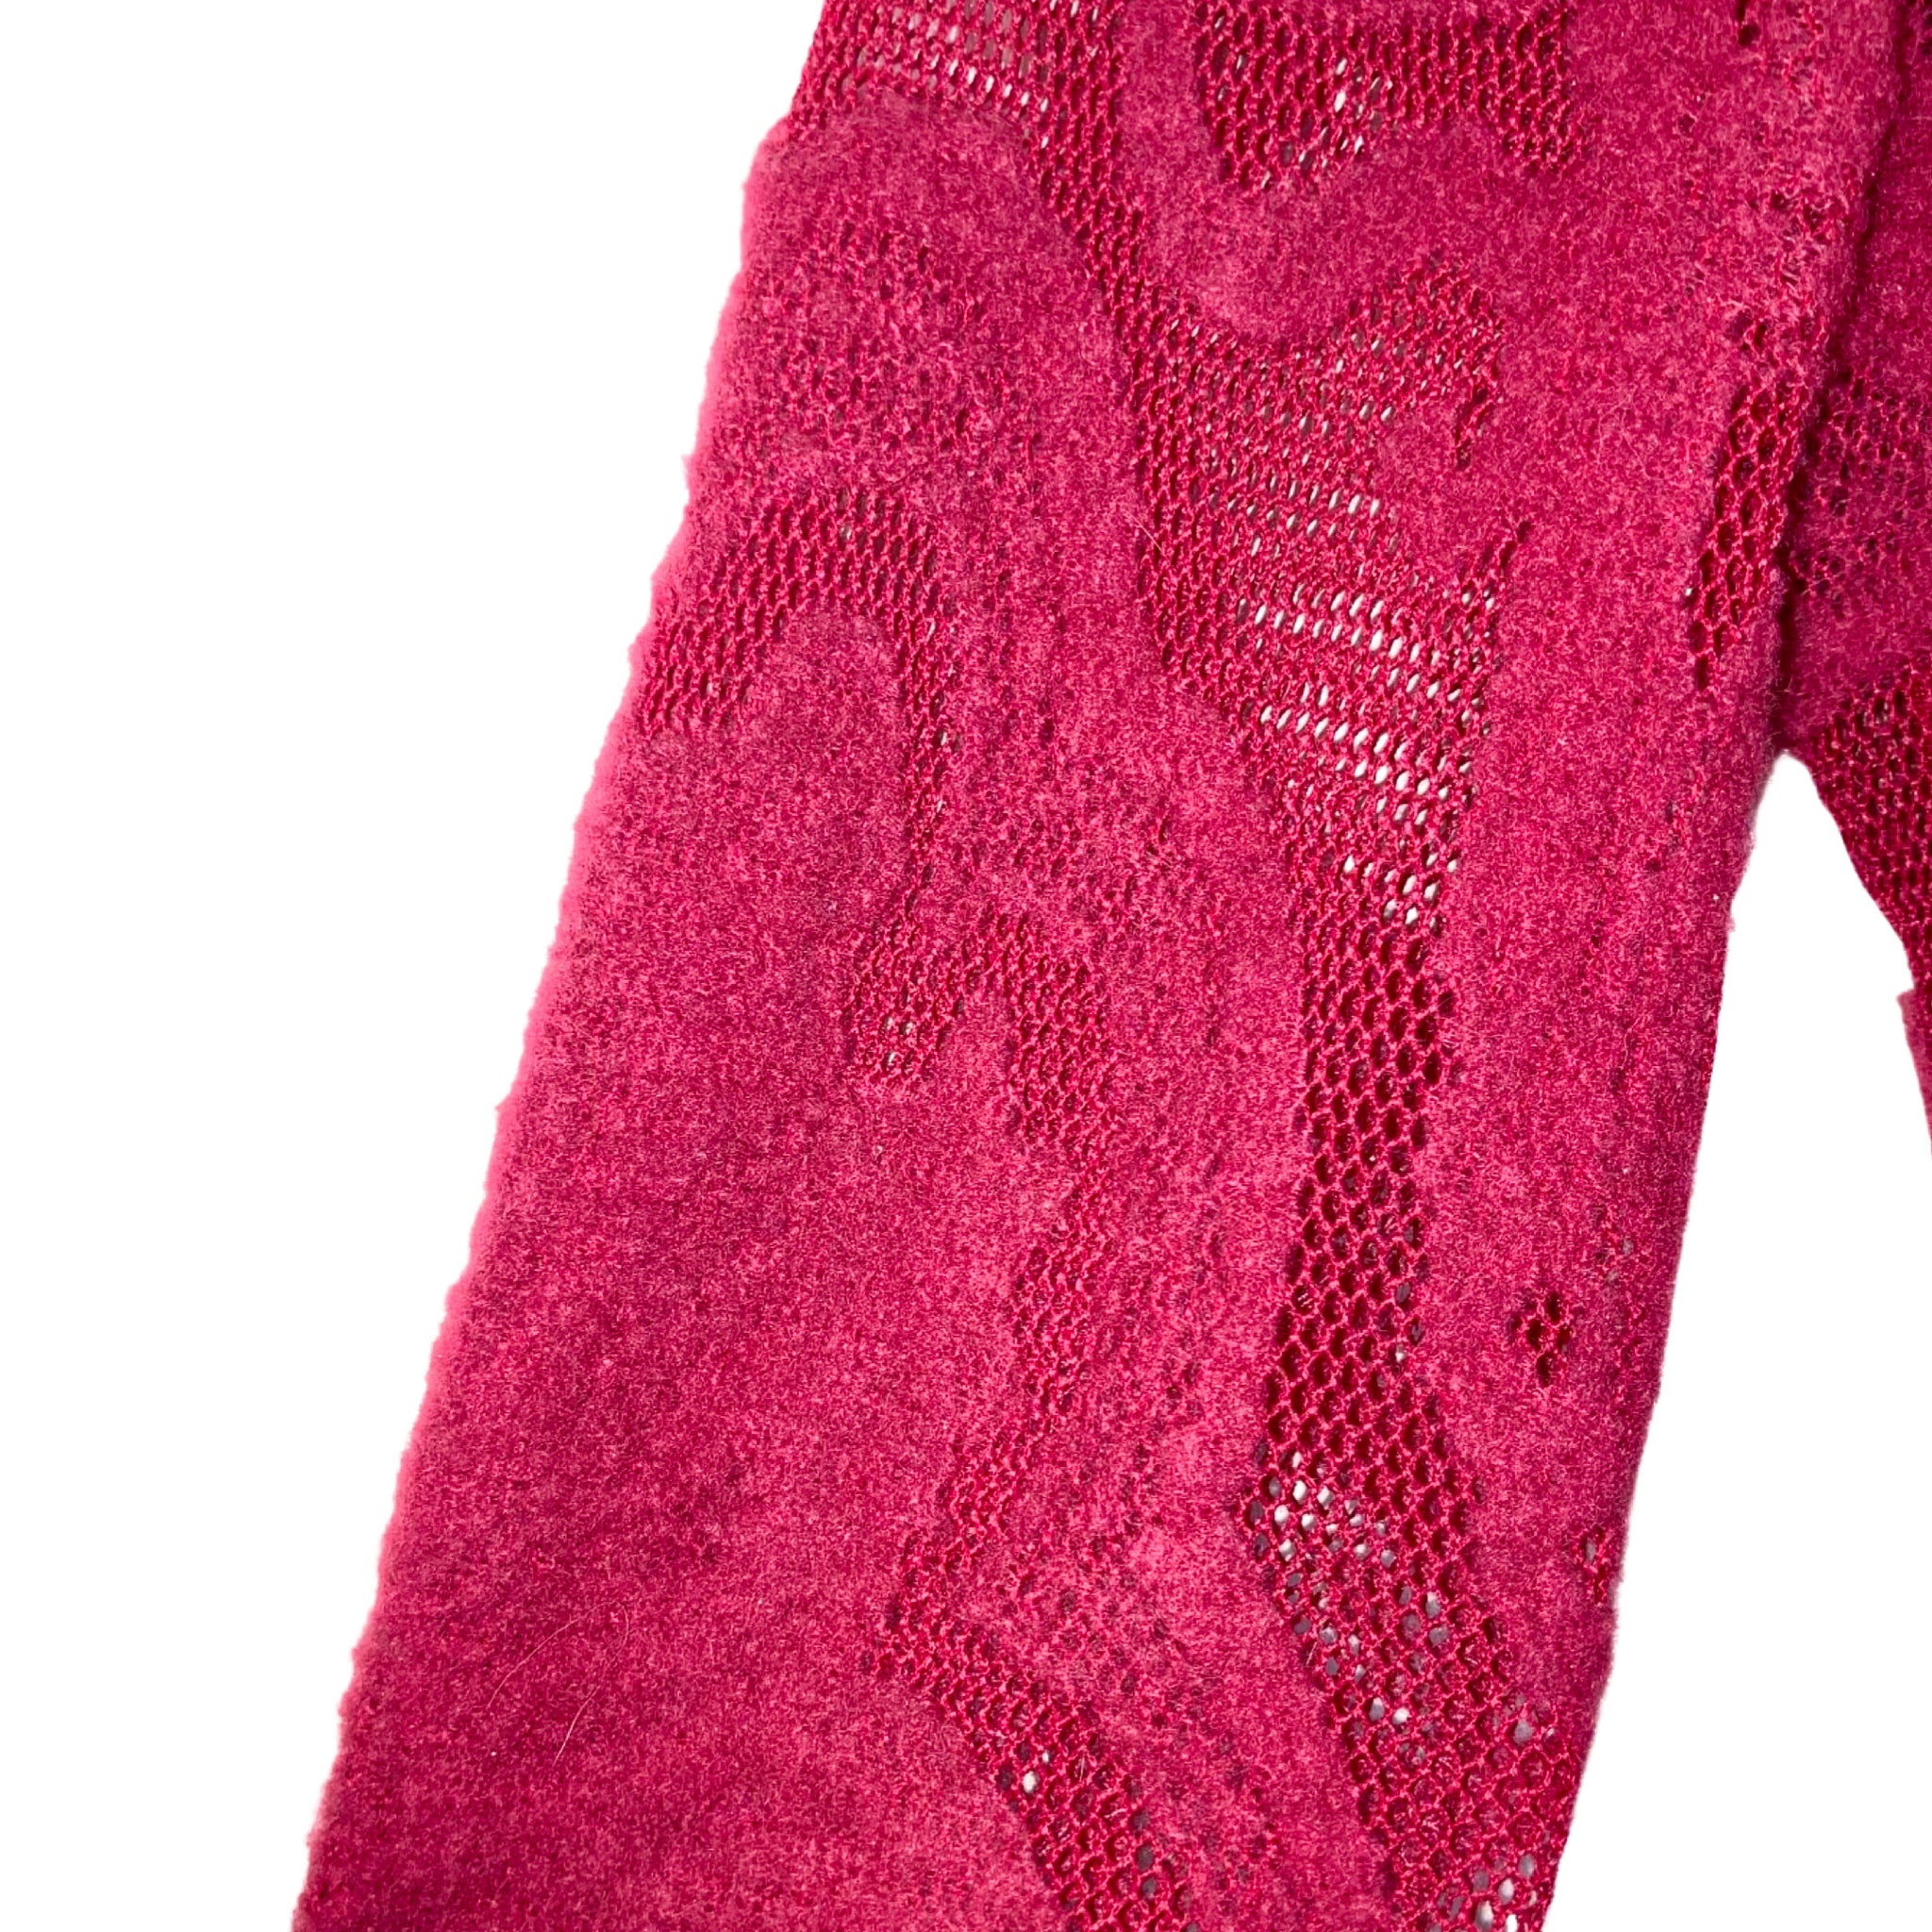 Roberto Cavalli Class S/S 2000 knitted dress